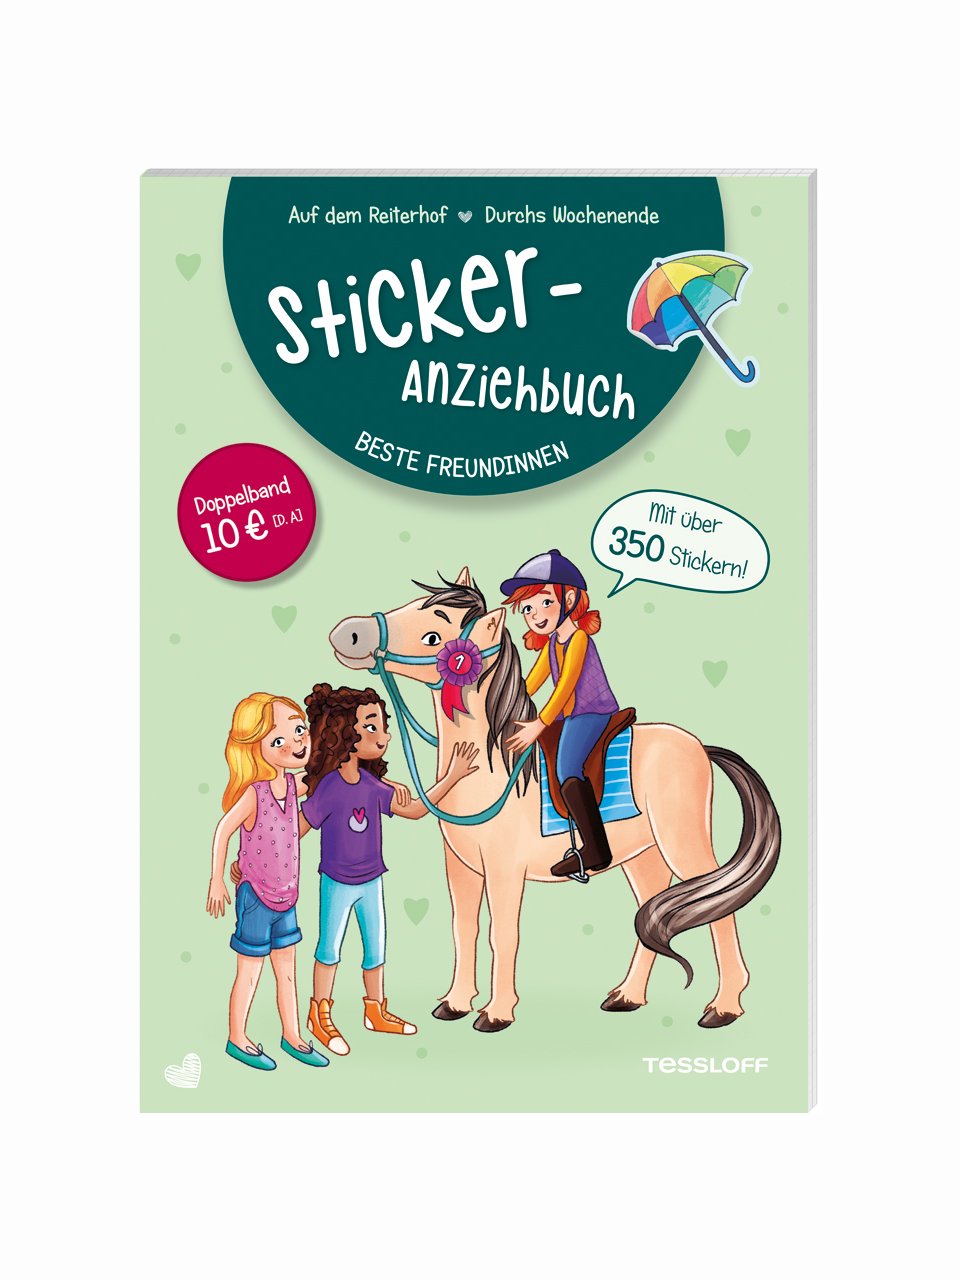 Sticker-Anziehbuch: Beste Freundinnen